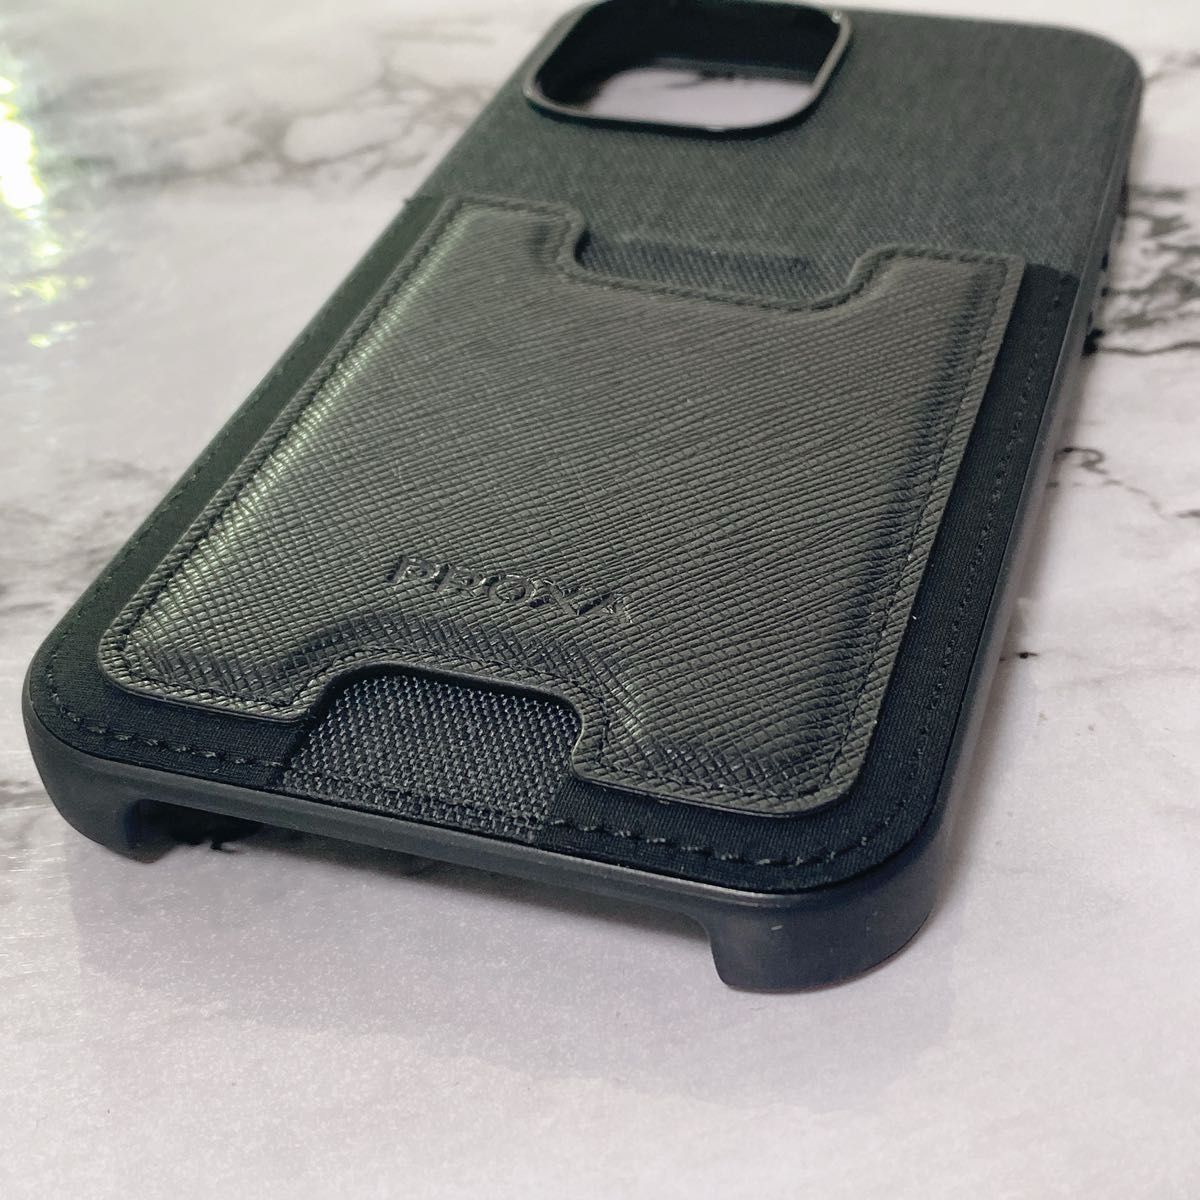 iPhone14proMAX用 背面カード収納付ケース 上質な手触り カバー 耐衝撃 軽量 薄い ICカード収納 スマホケース黒